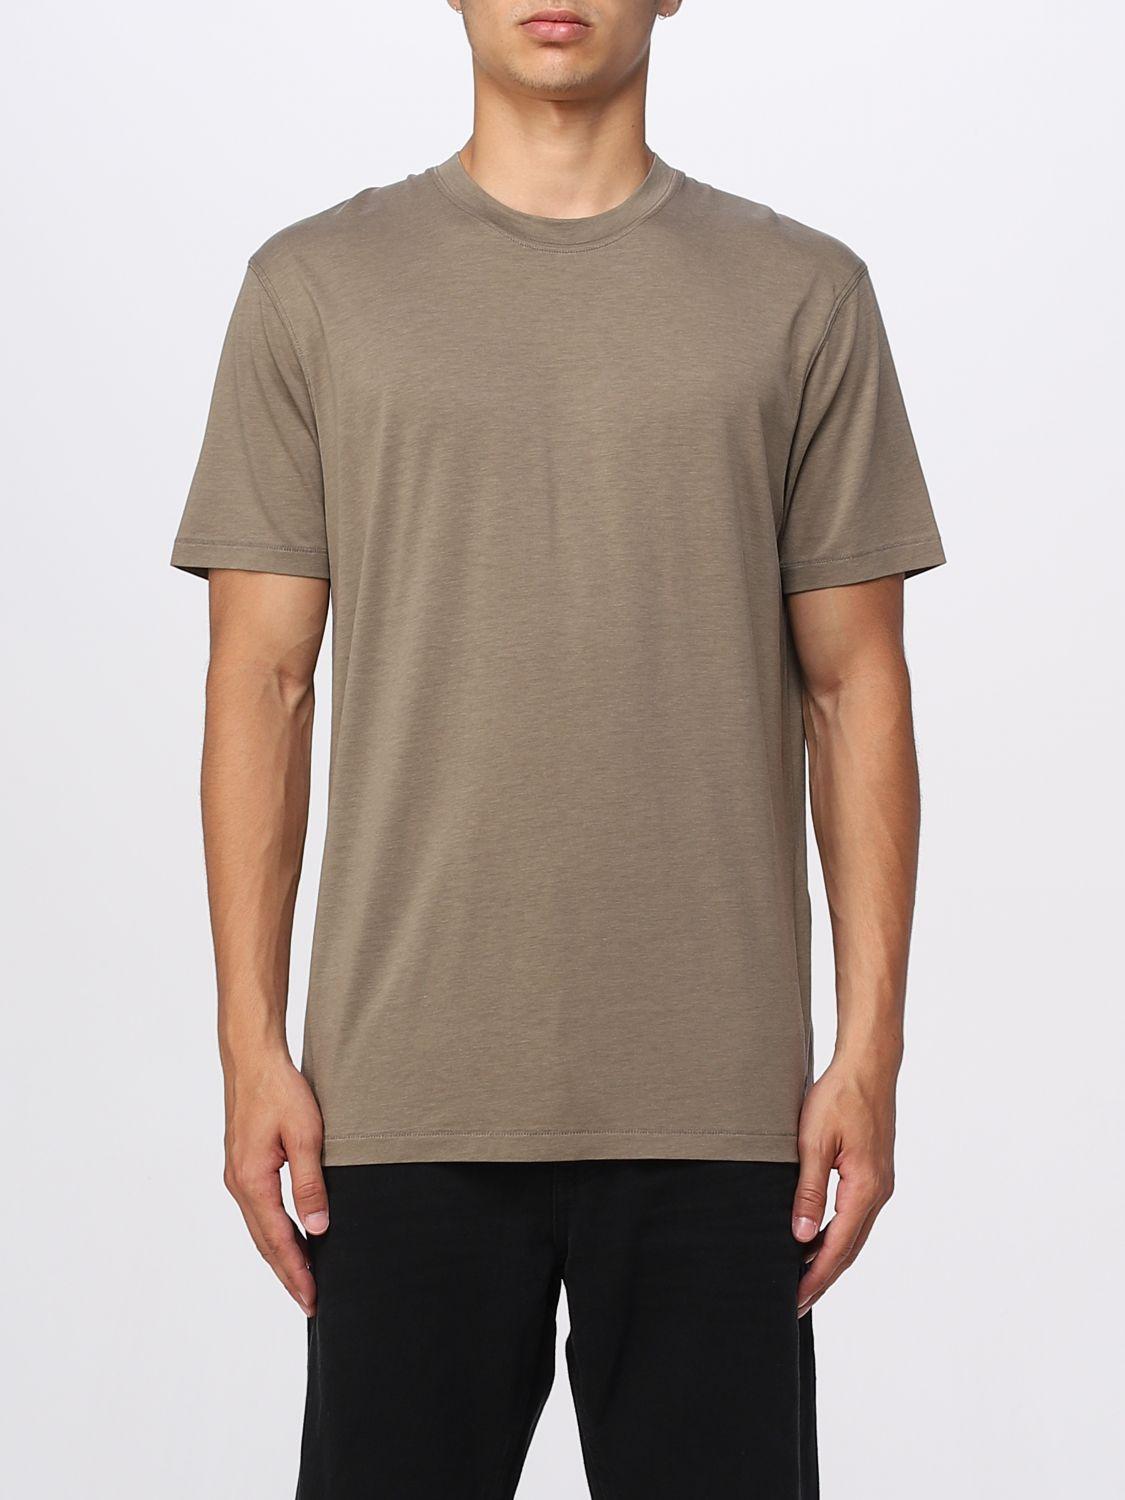 Tom Ford T-shirt in Gray for Men | Lyst